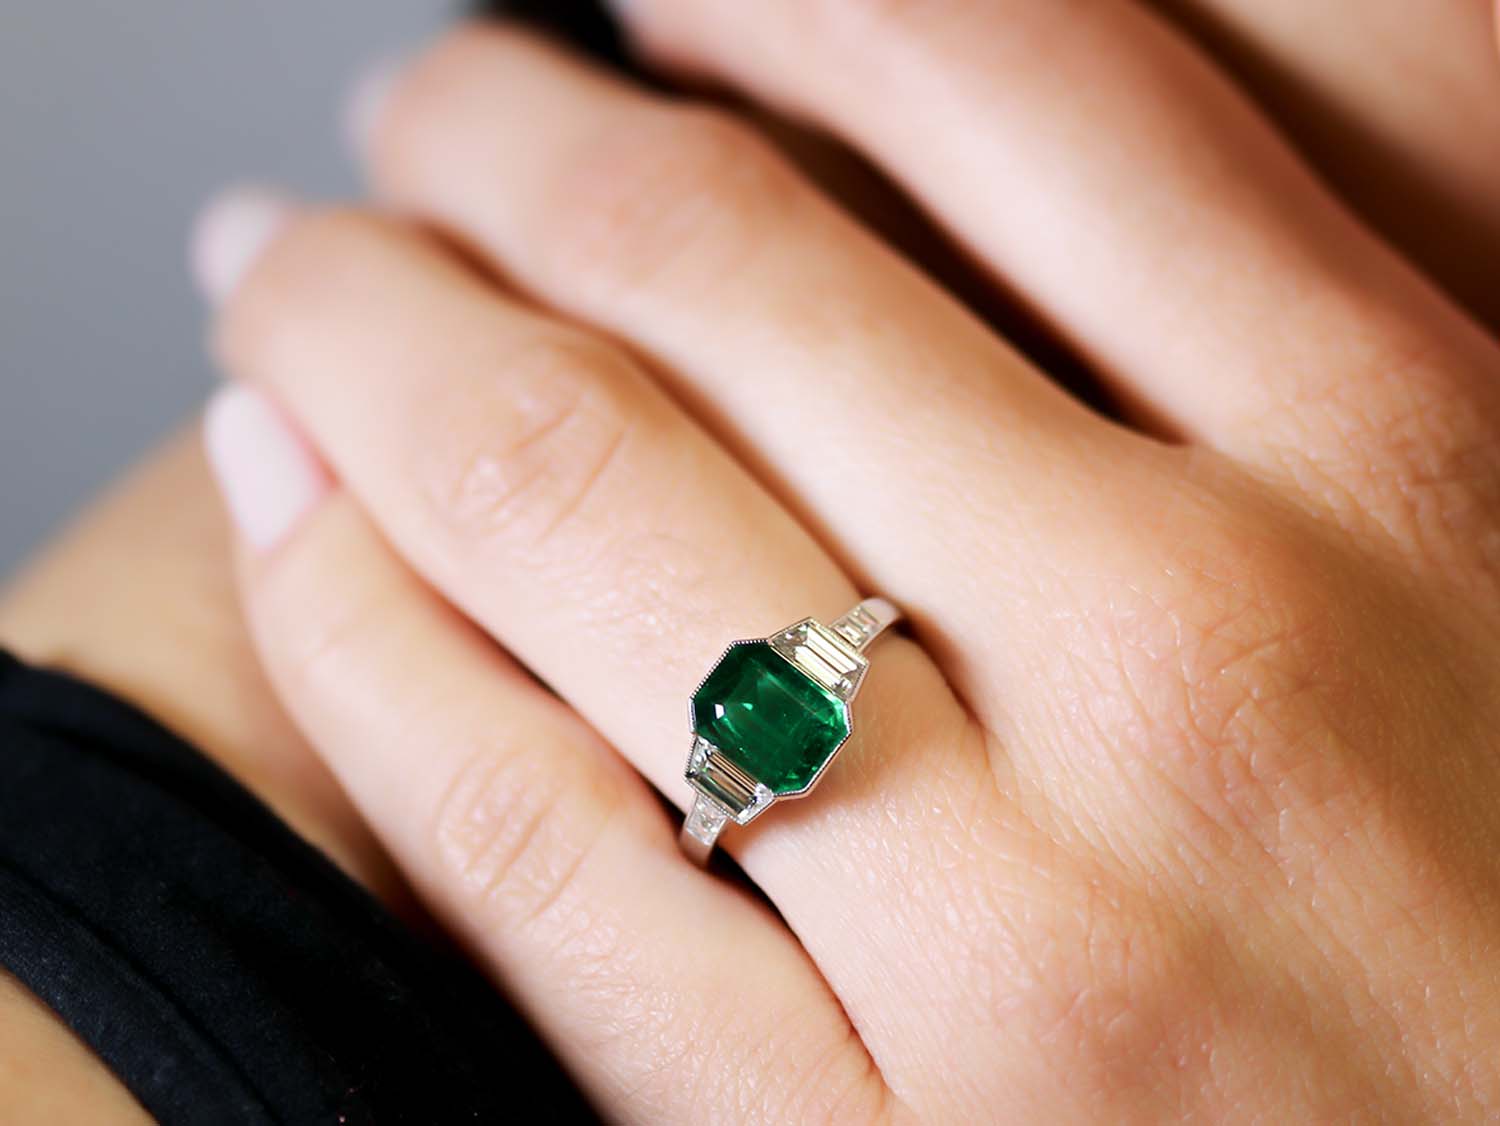 Classic Art Deco Engagement Ring with Baguette Cut Diamonds – ARTEMER